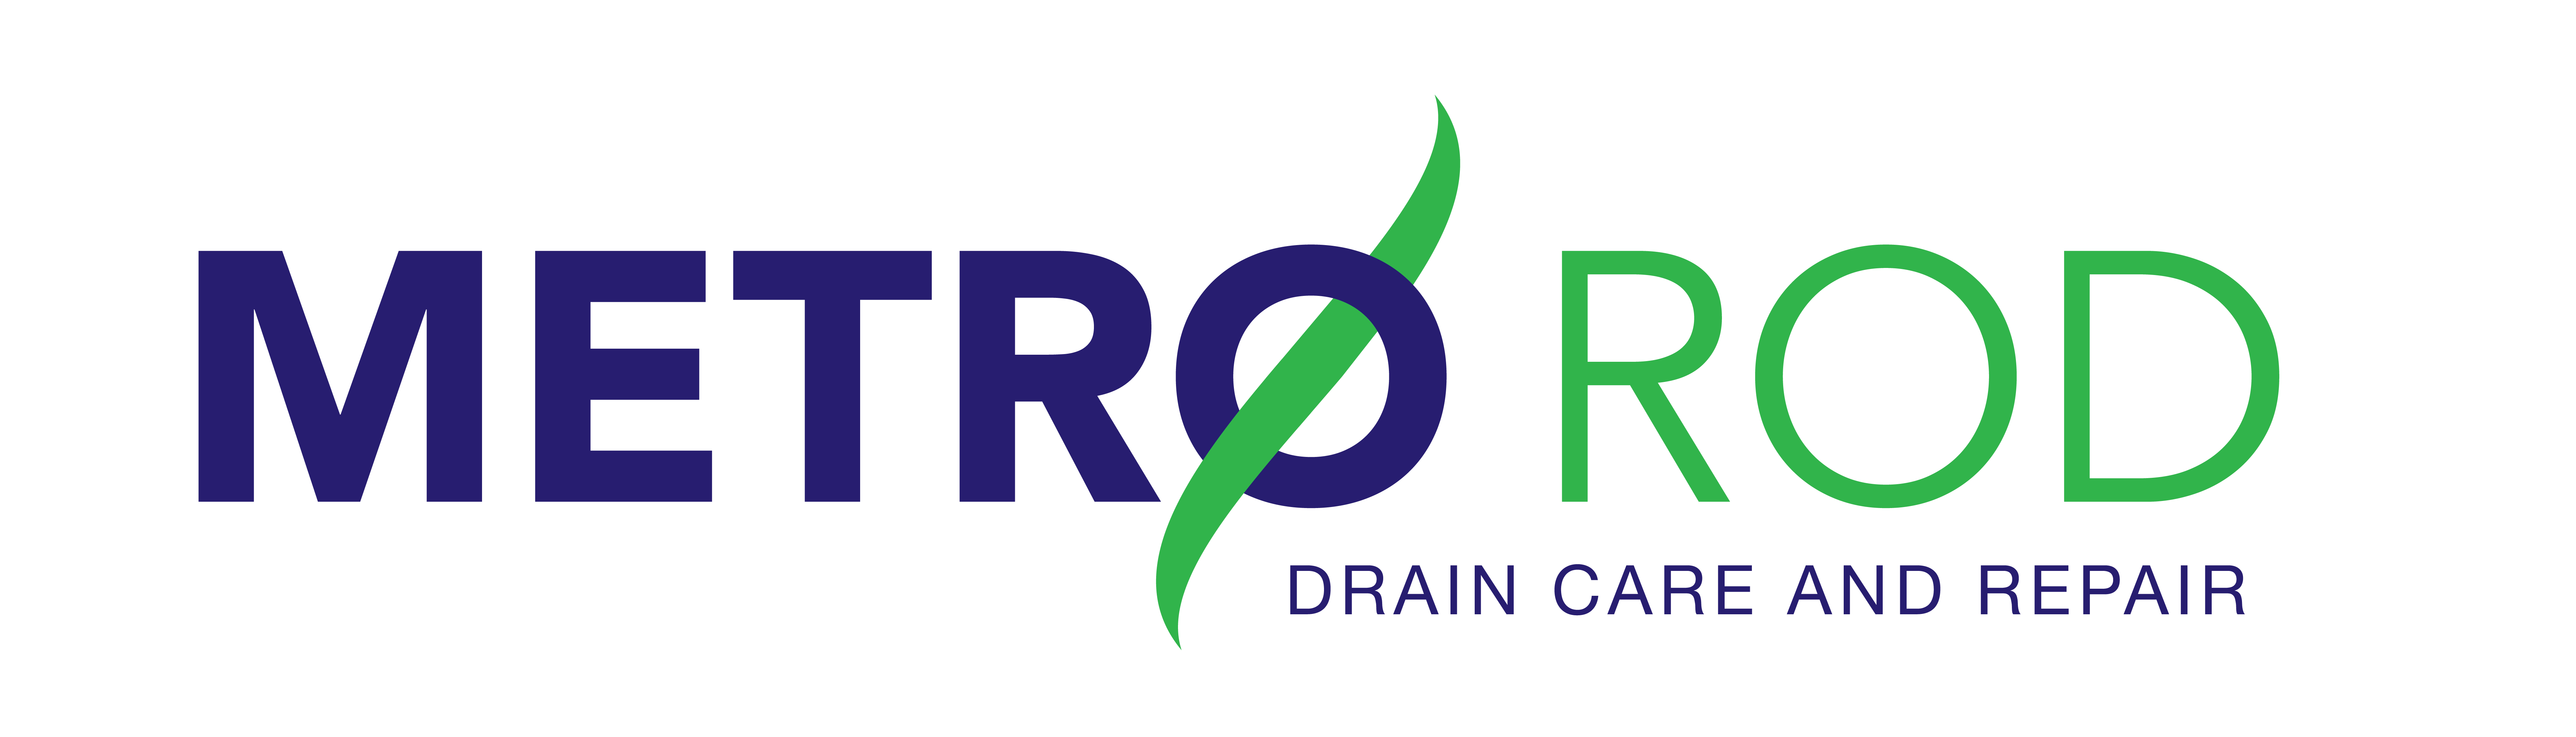 Metro Rod Ltd Logo